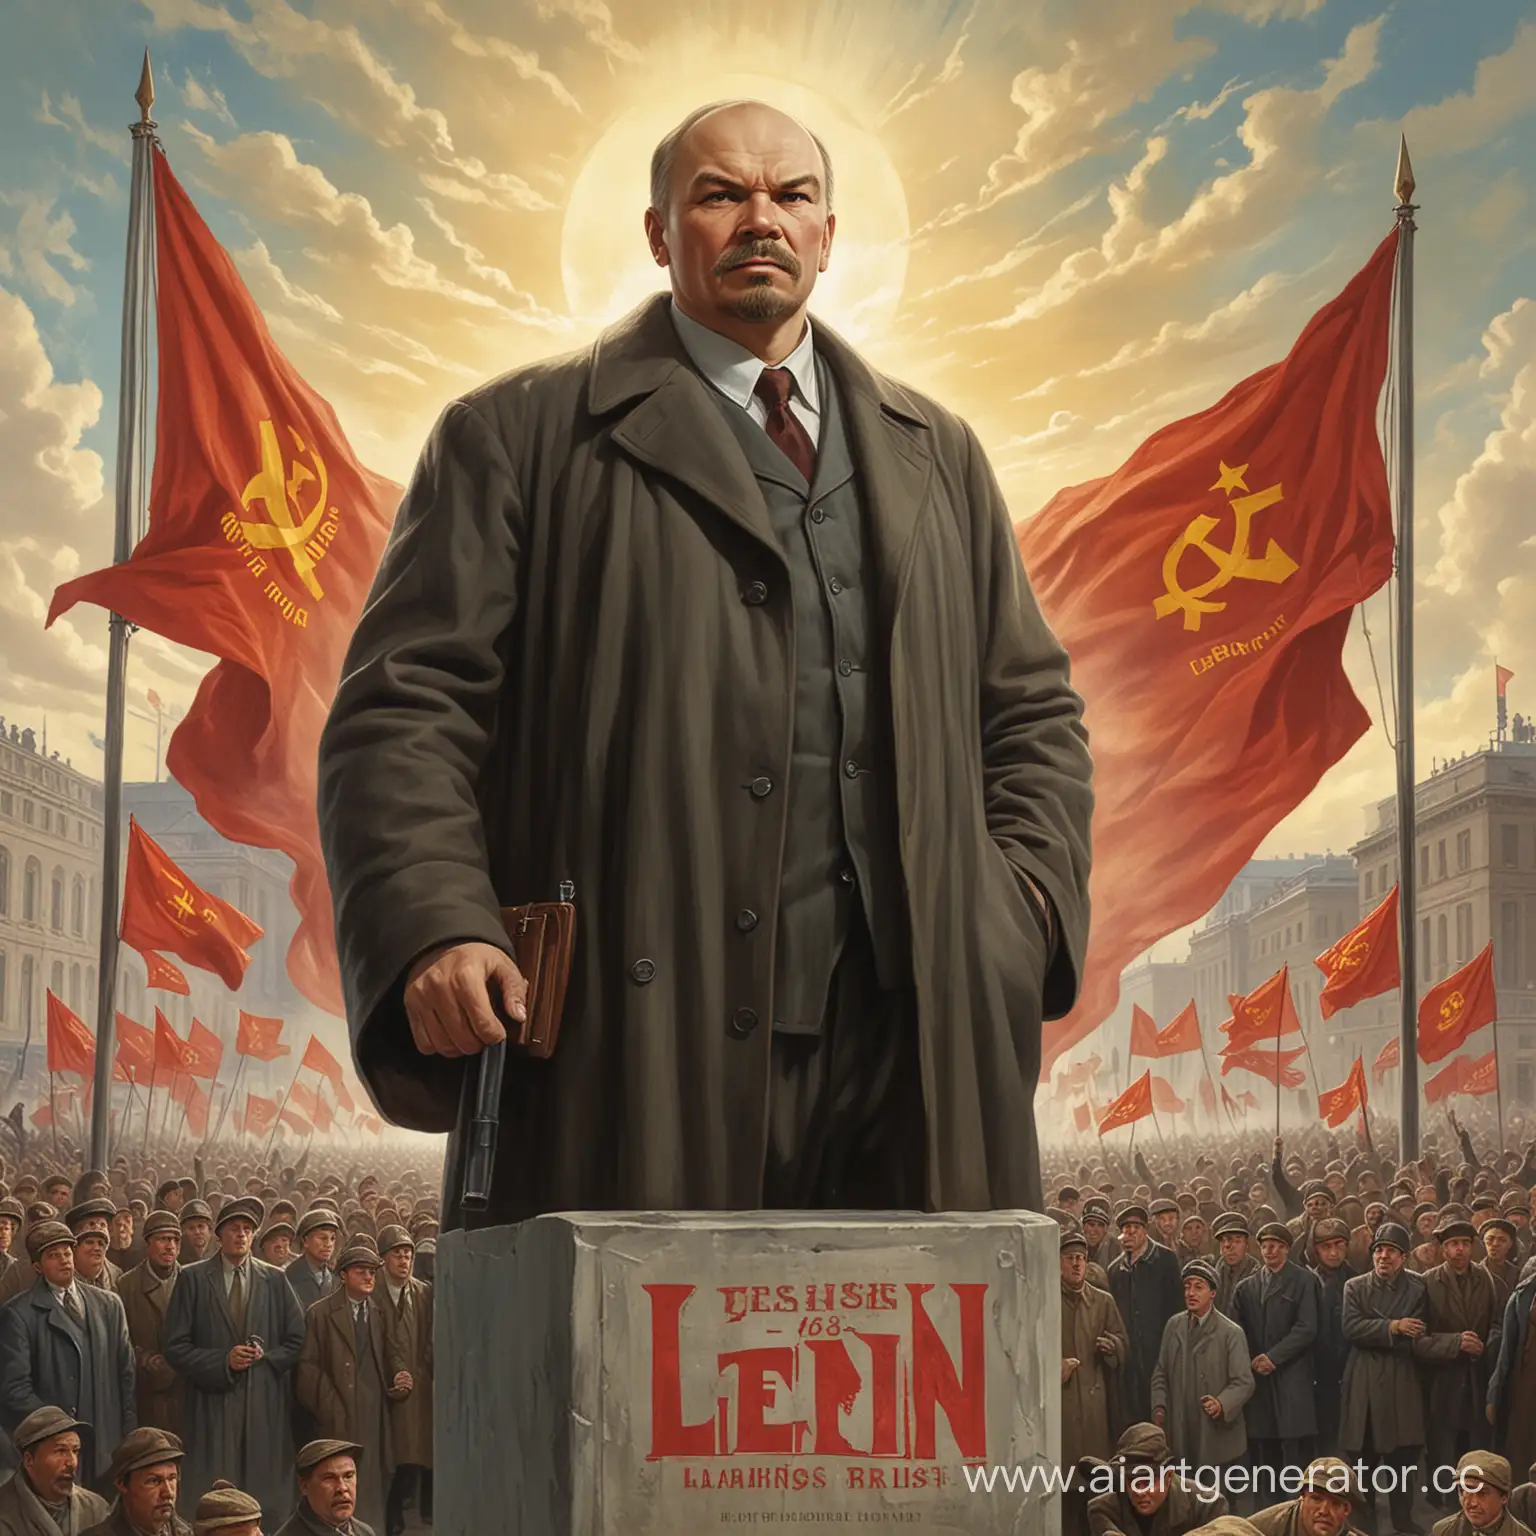 Lenin-Rising-Monumental-Tribute-in-Vibrant-Red-Tones